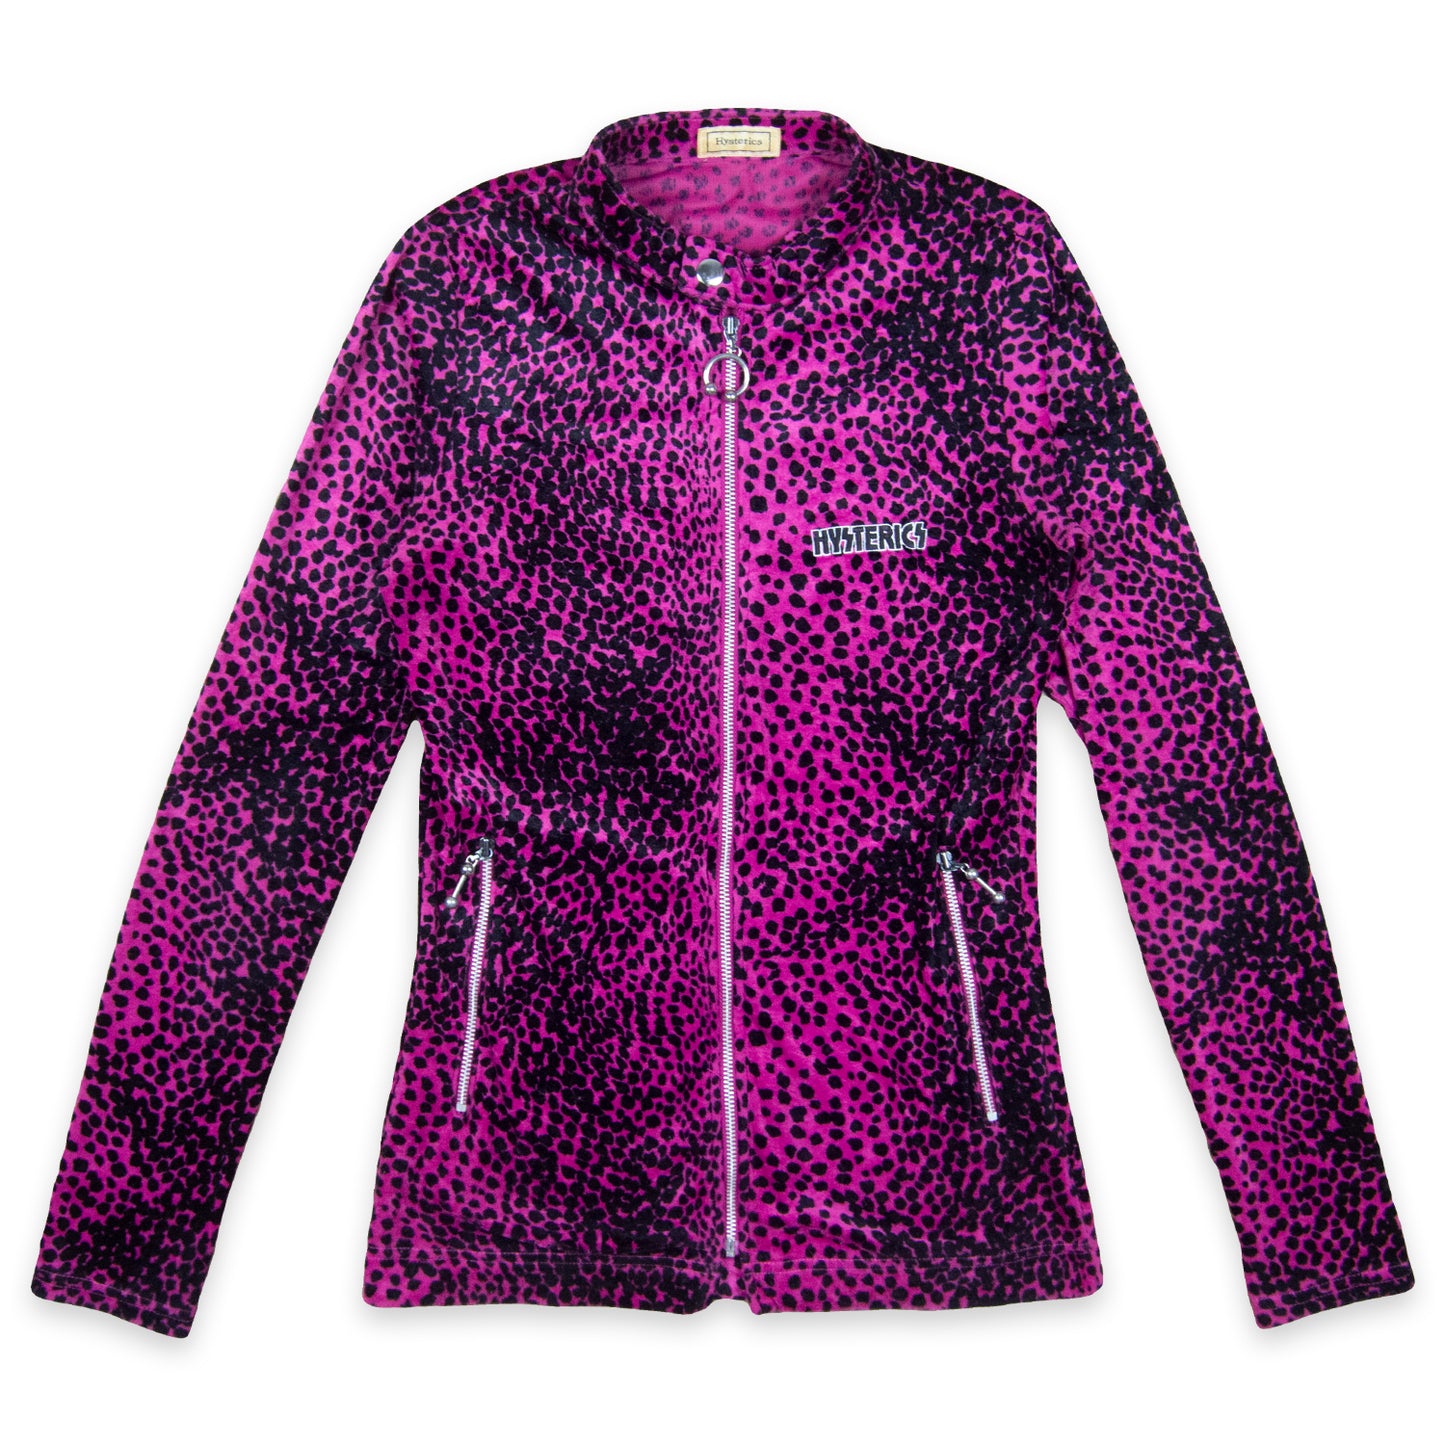 Hysteric Glamour Cheetah Print Thin Velour Zip Up Jacket